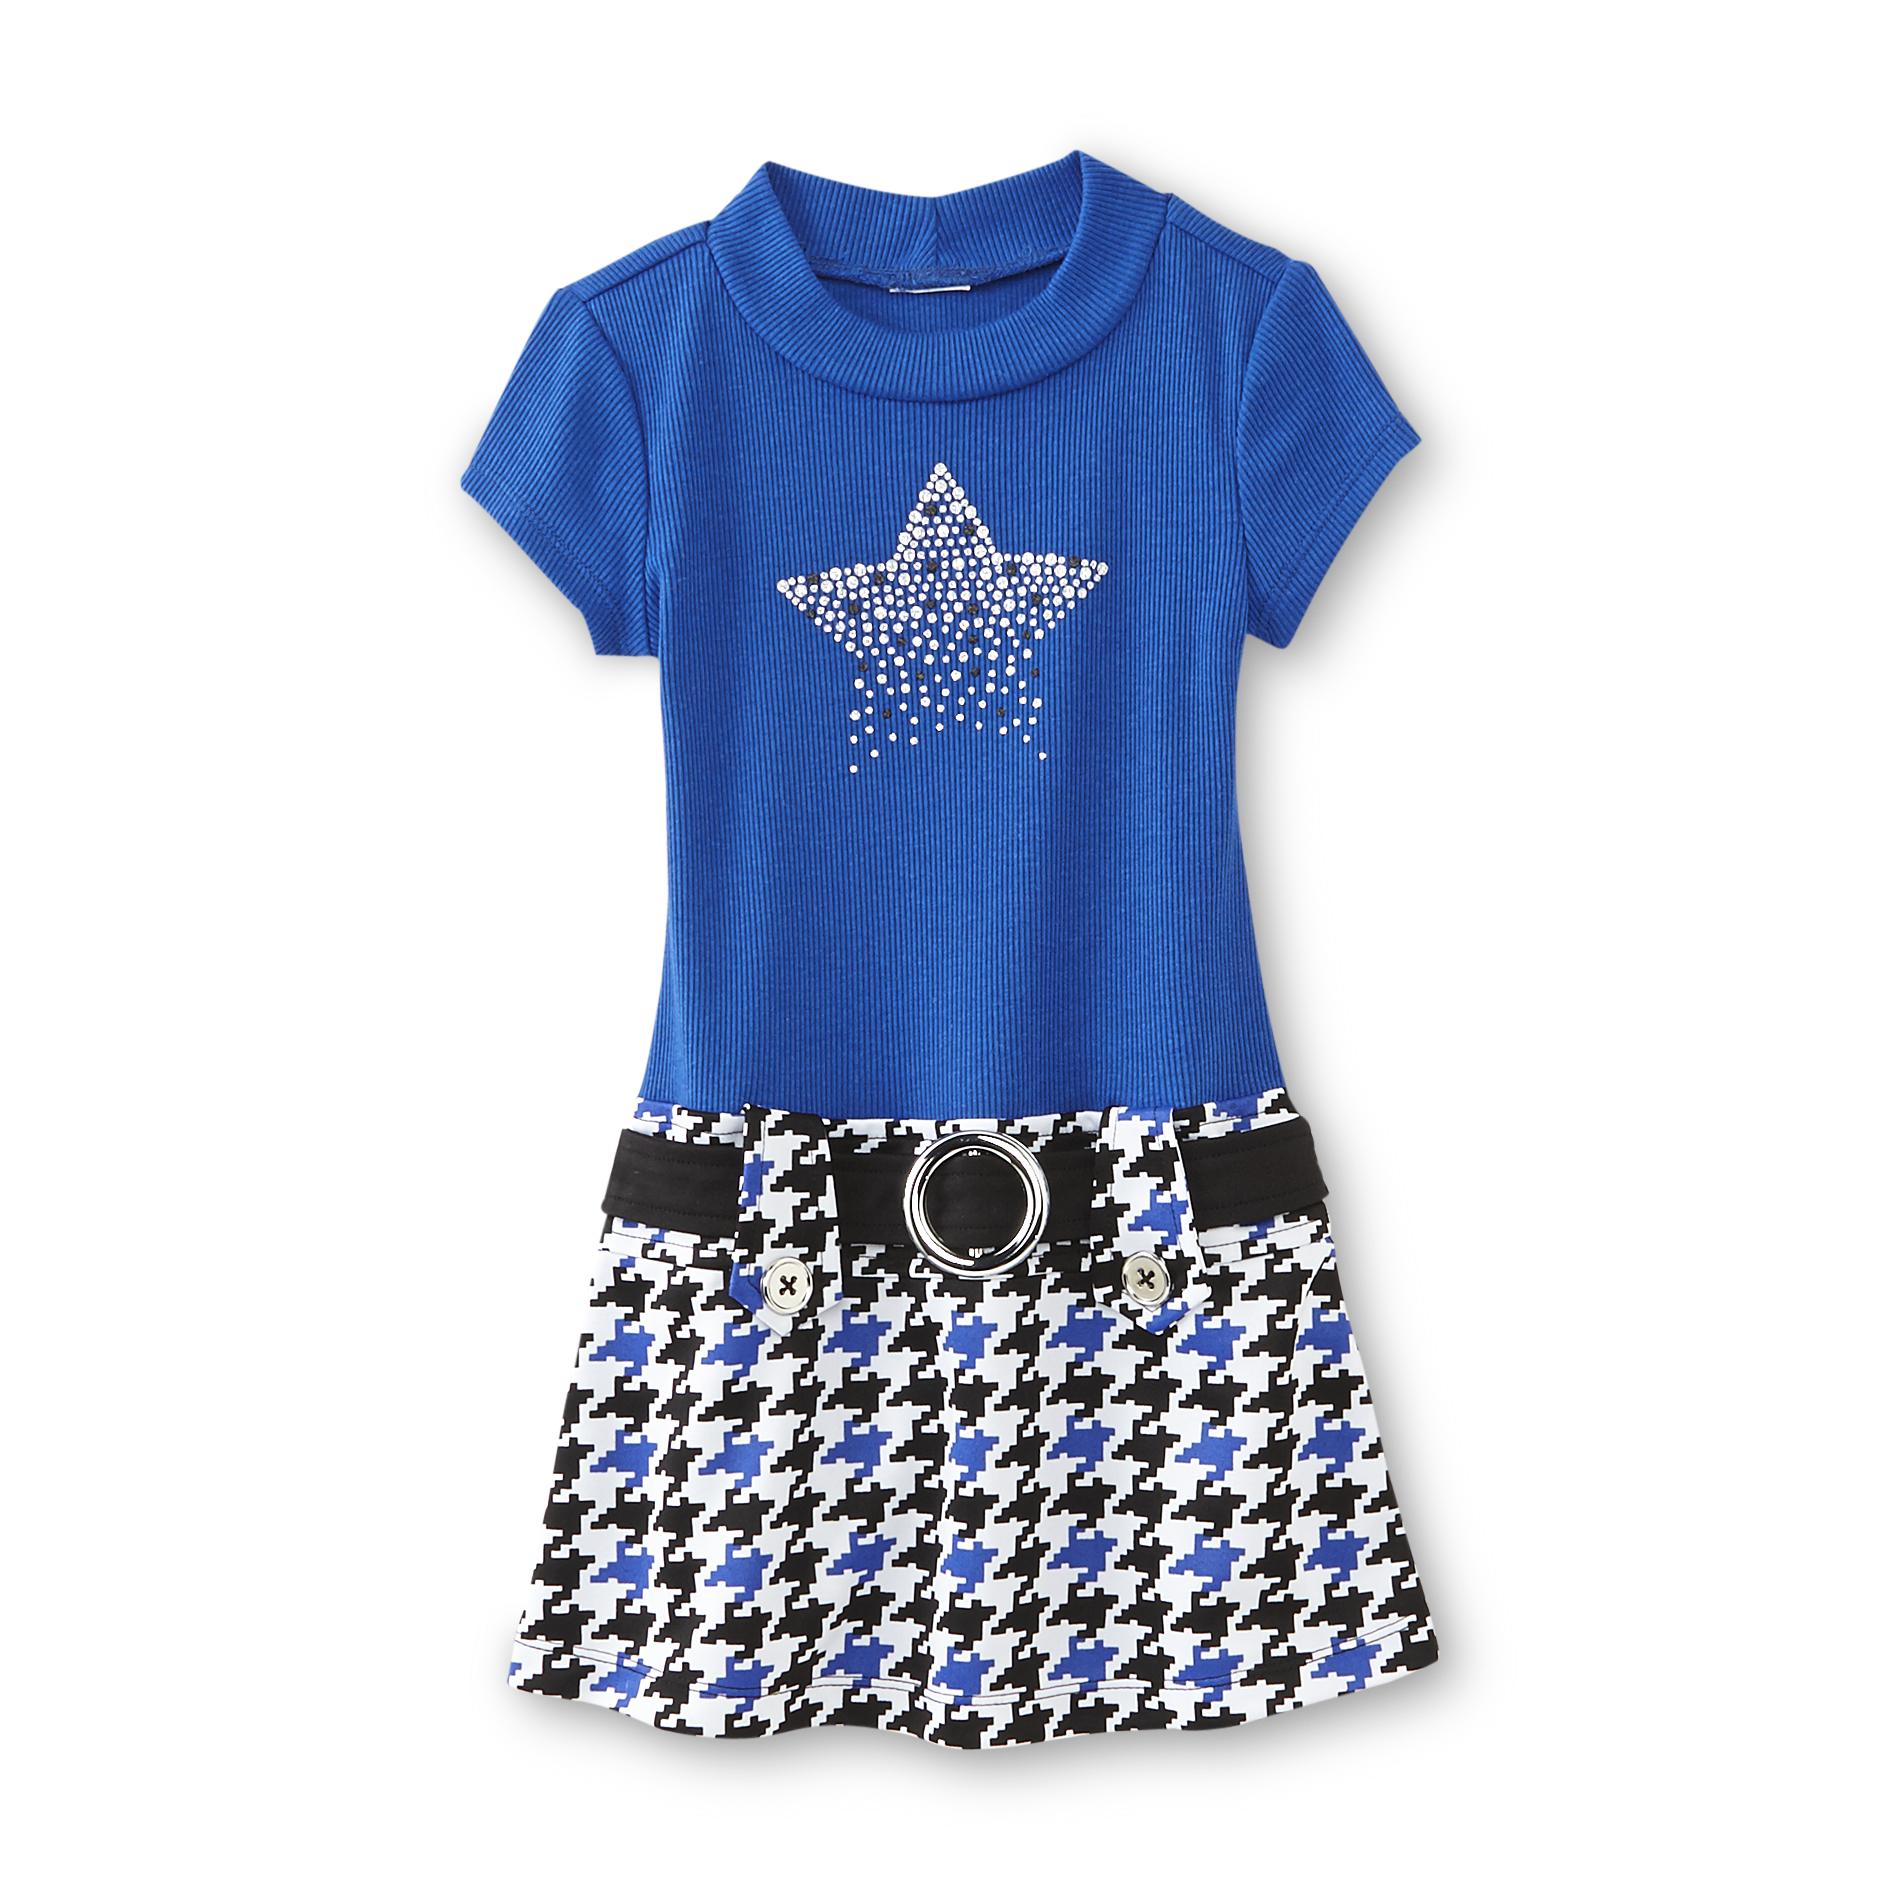 WonderKids Infant & Toddler Girl's Drop Waist Dress - Houndstooth Check & Star